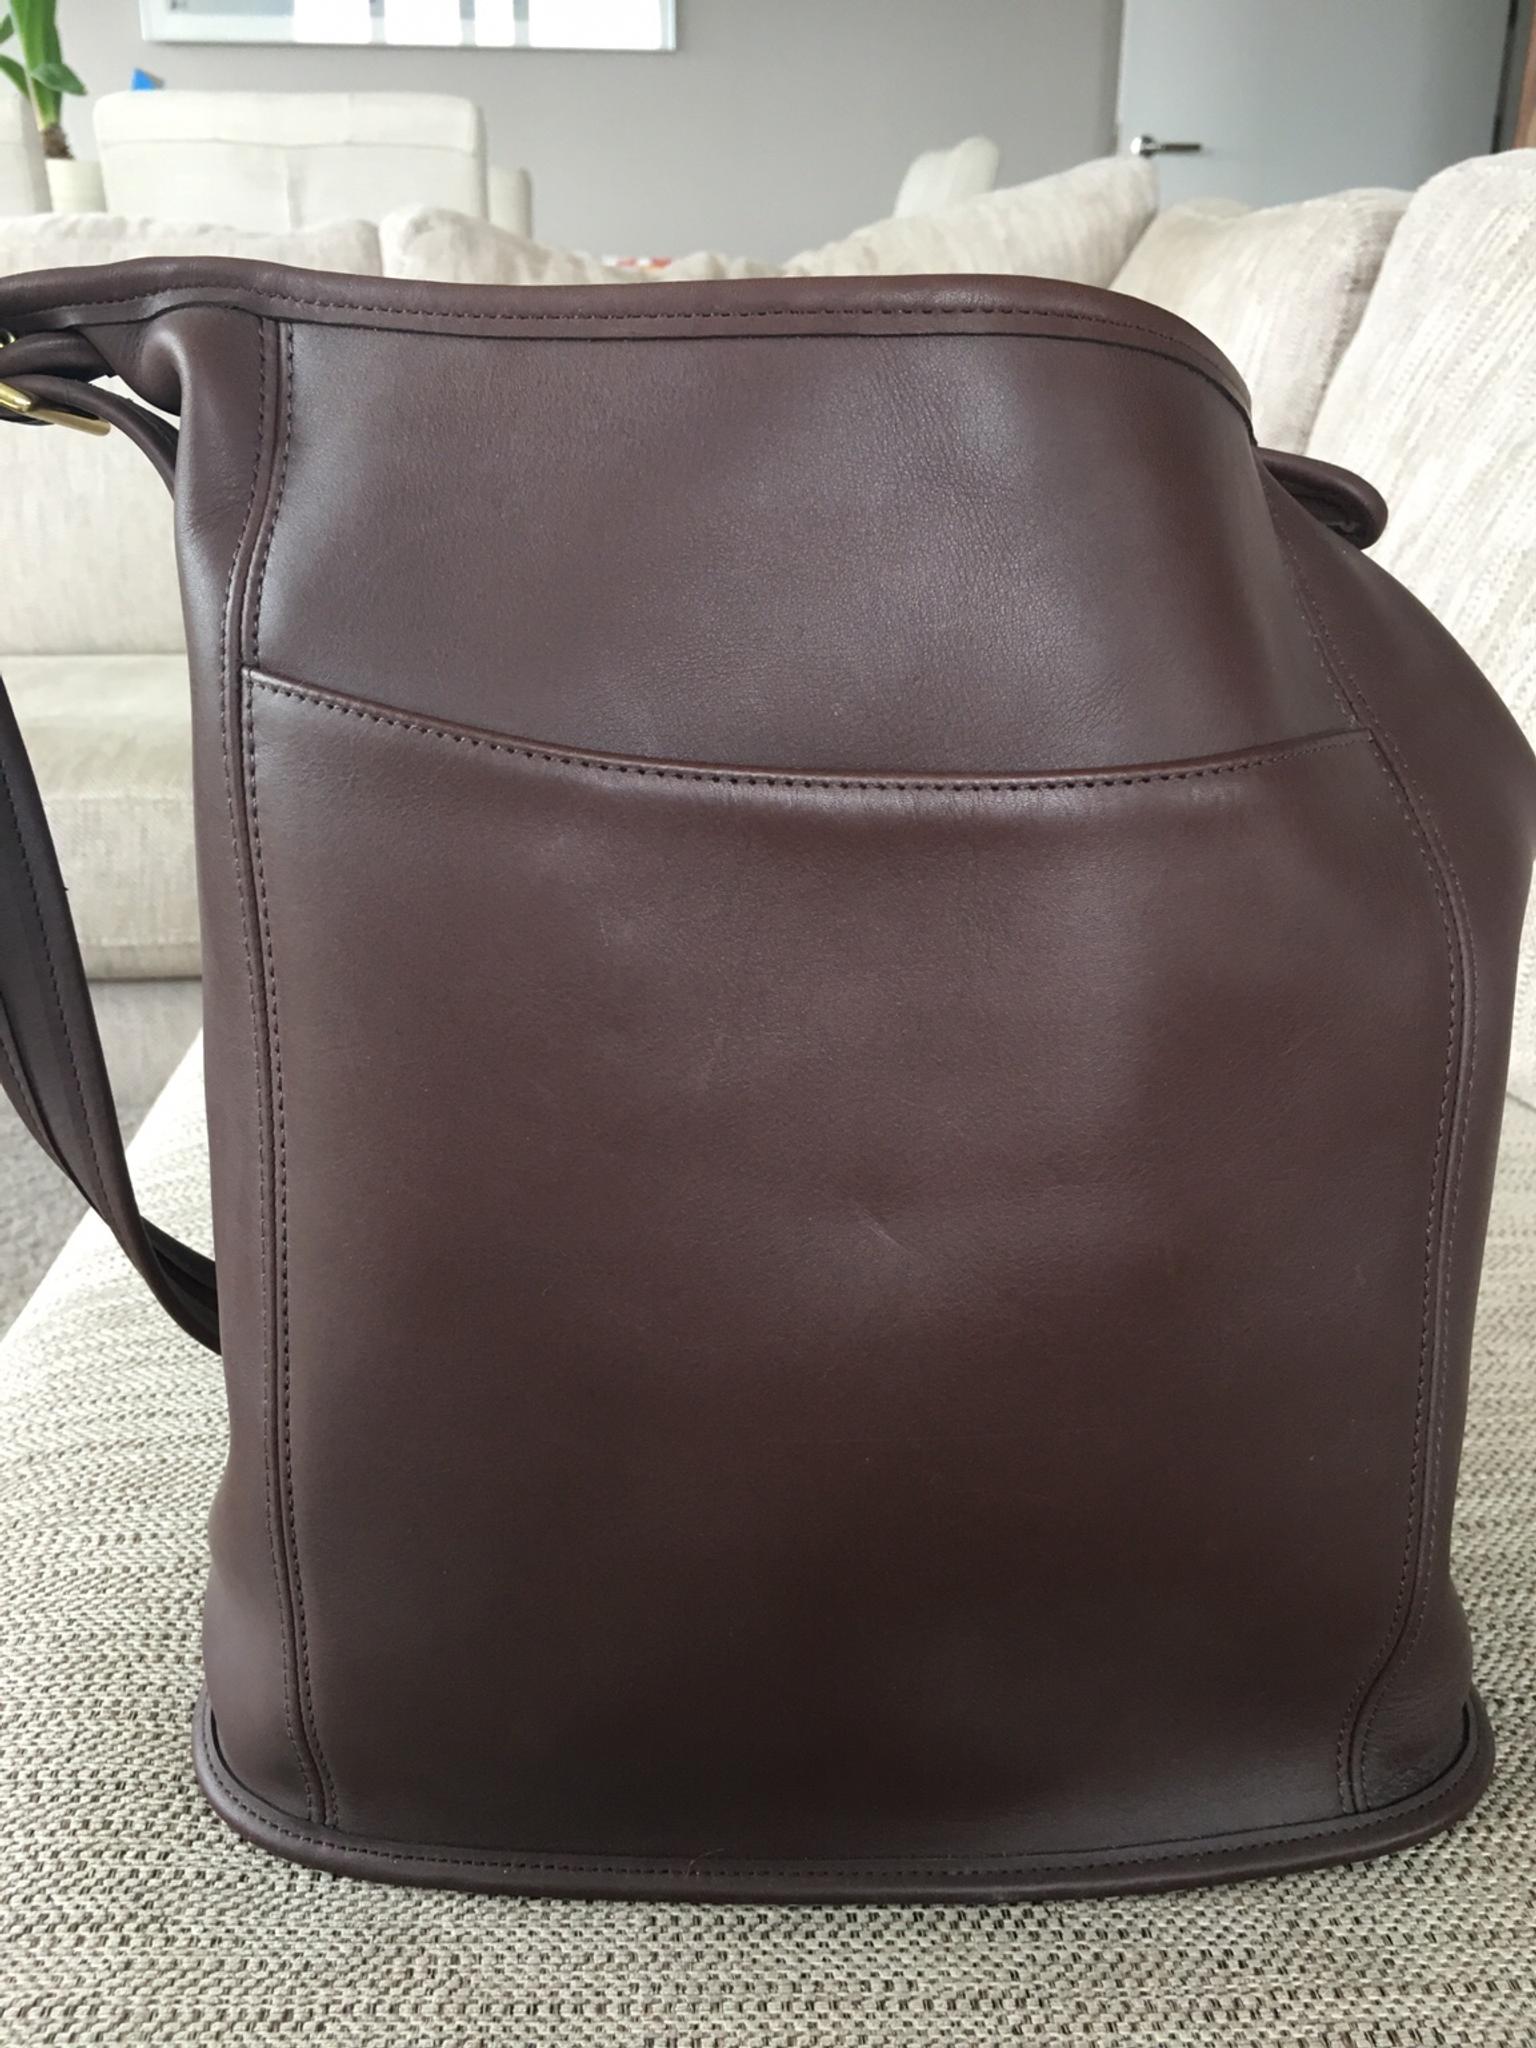 Coach handbag in SE10 London for £70.00 for sale | Shpock